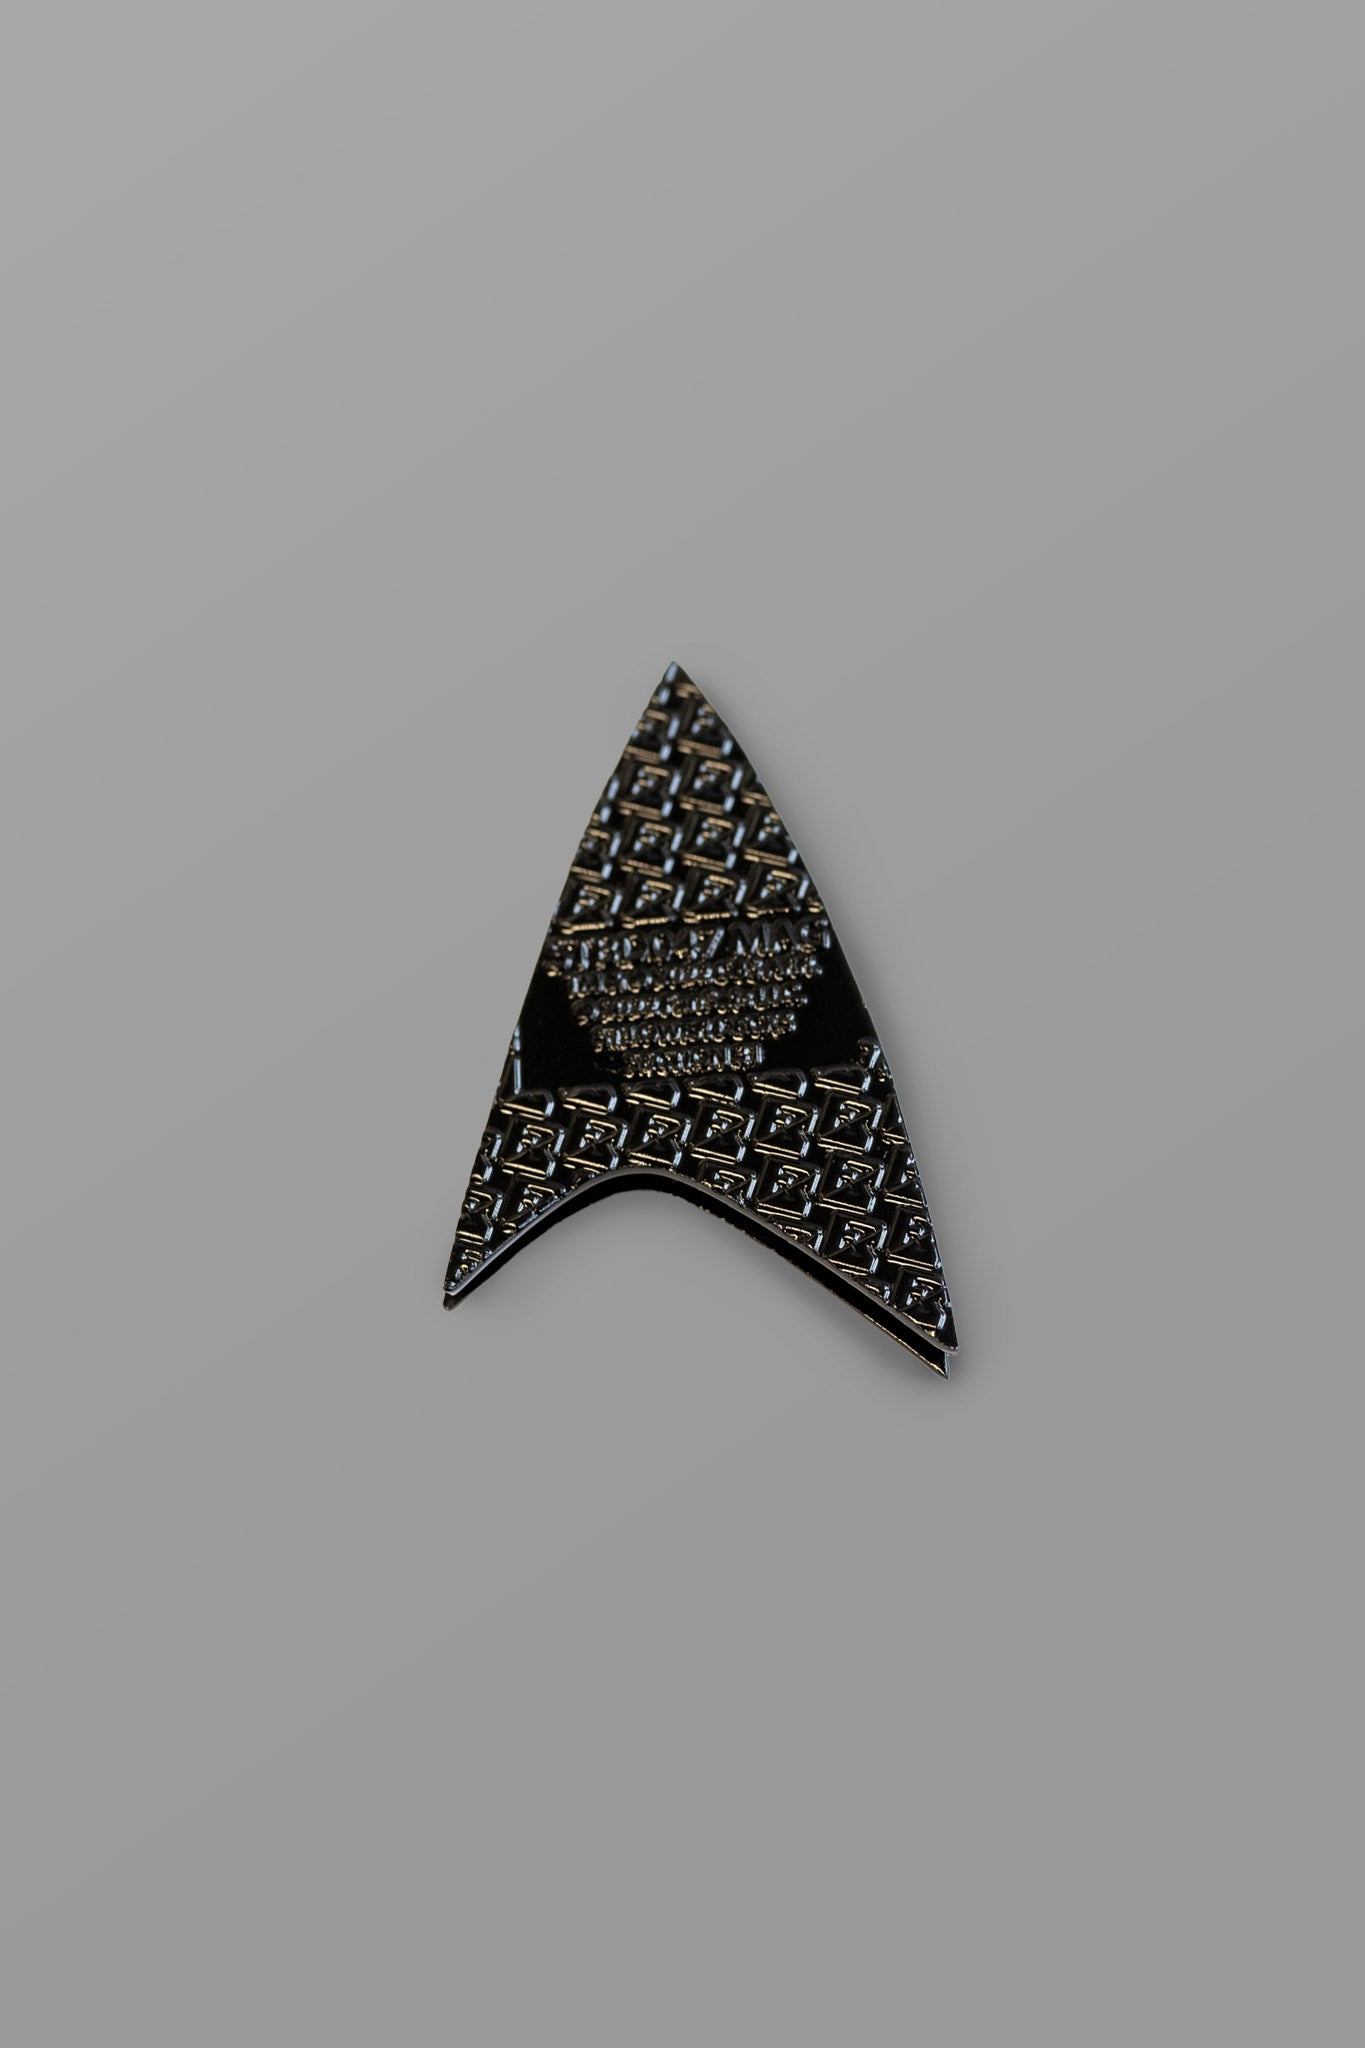 Star Trek: Lower Decks Badge